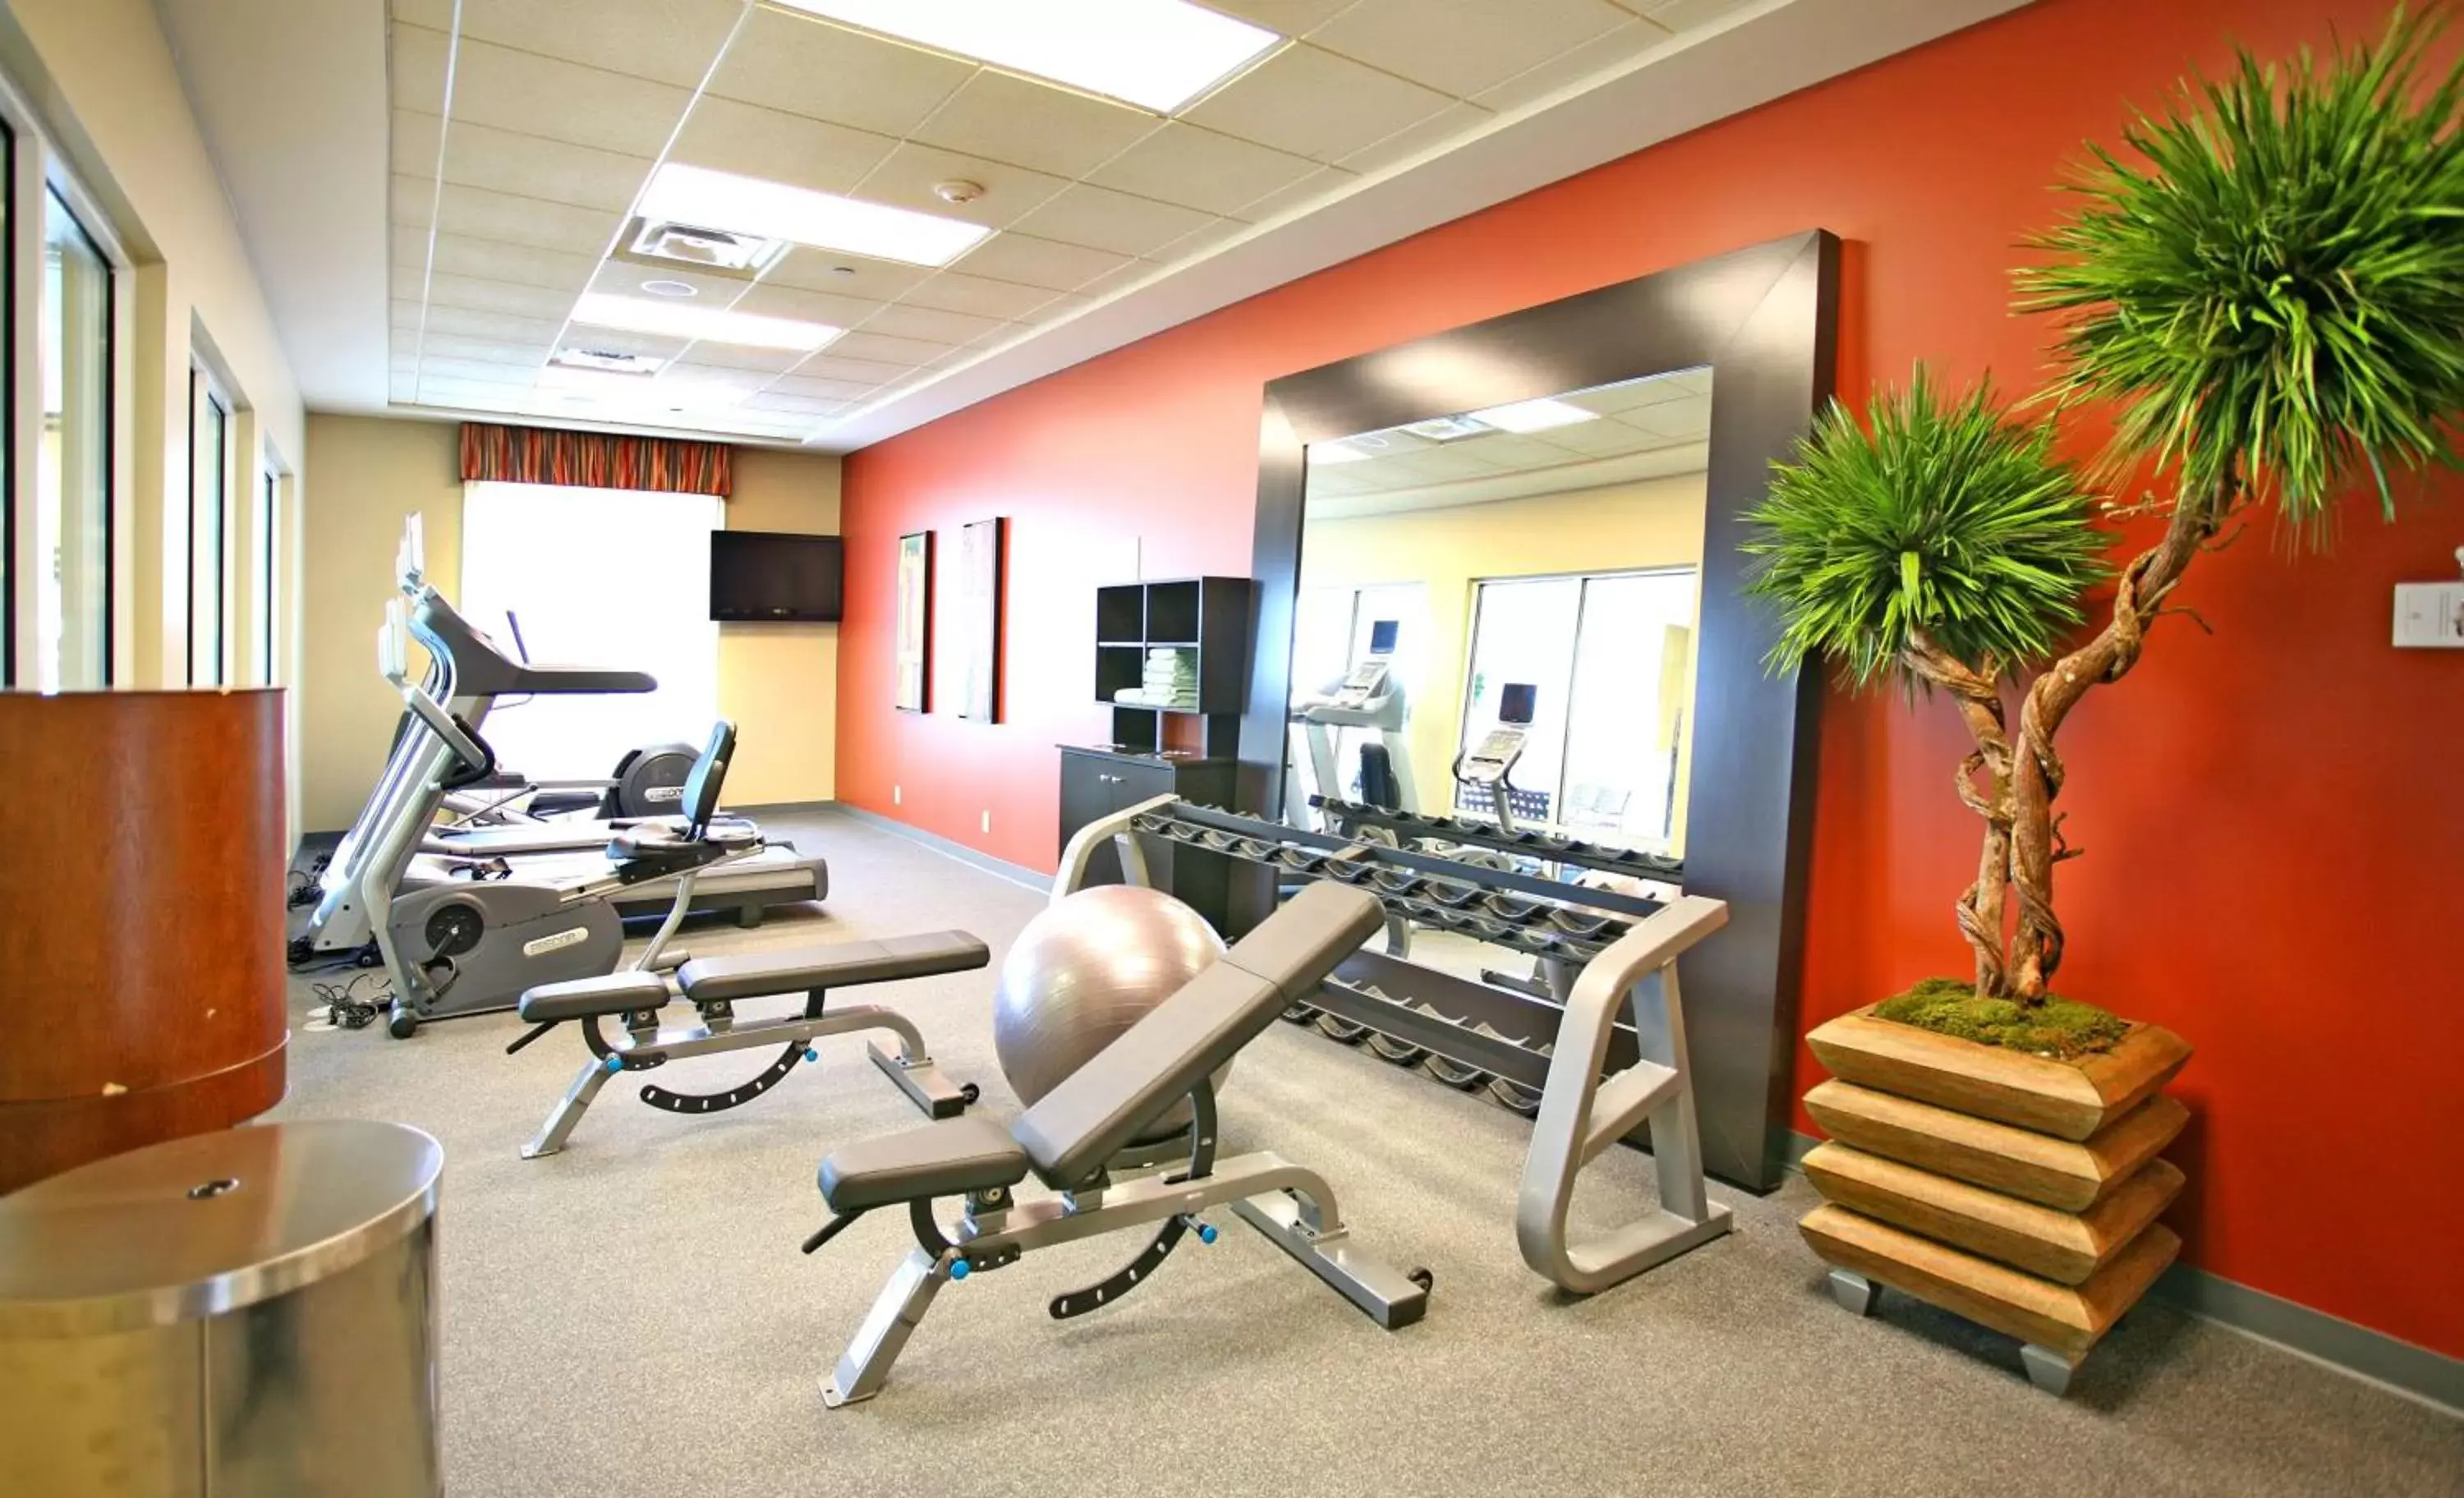 Fitness centre/facilities, Fitness Center/Facilities in Hilton Garden Inn Cincinnati Blue Ash